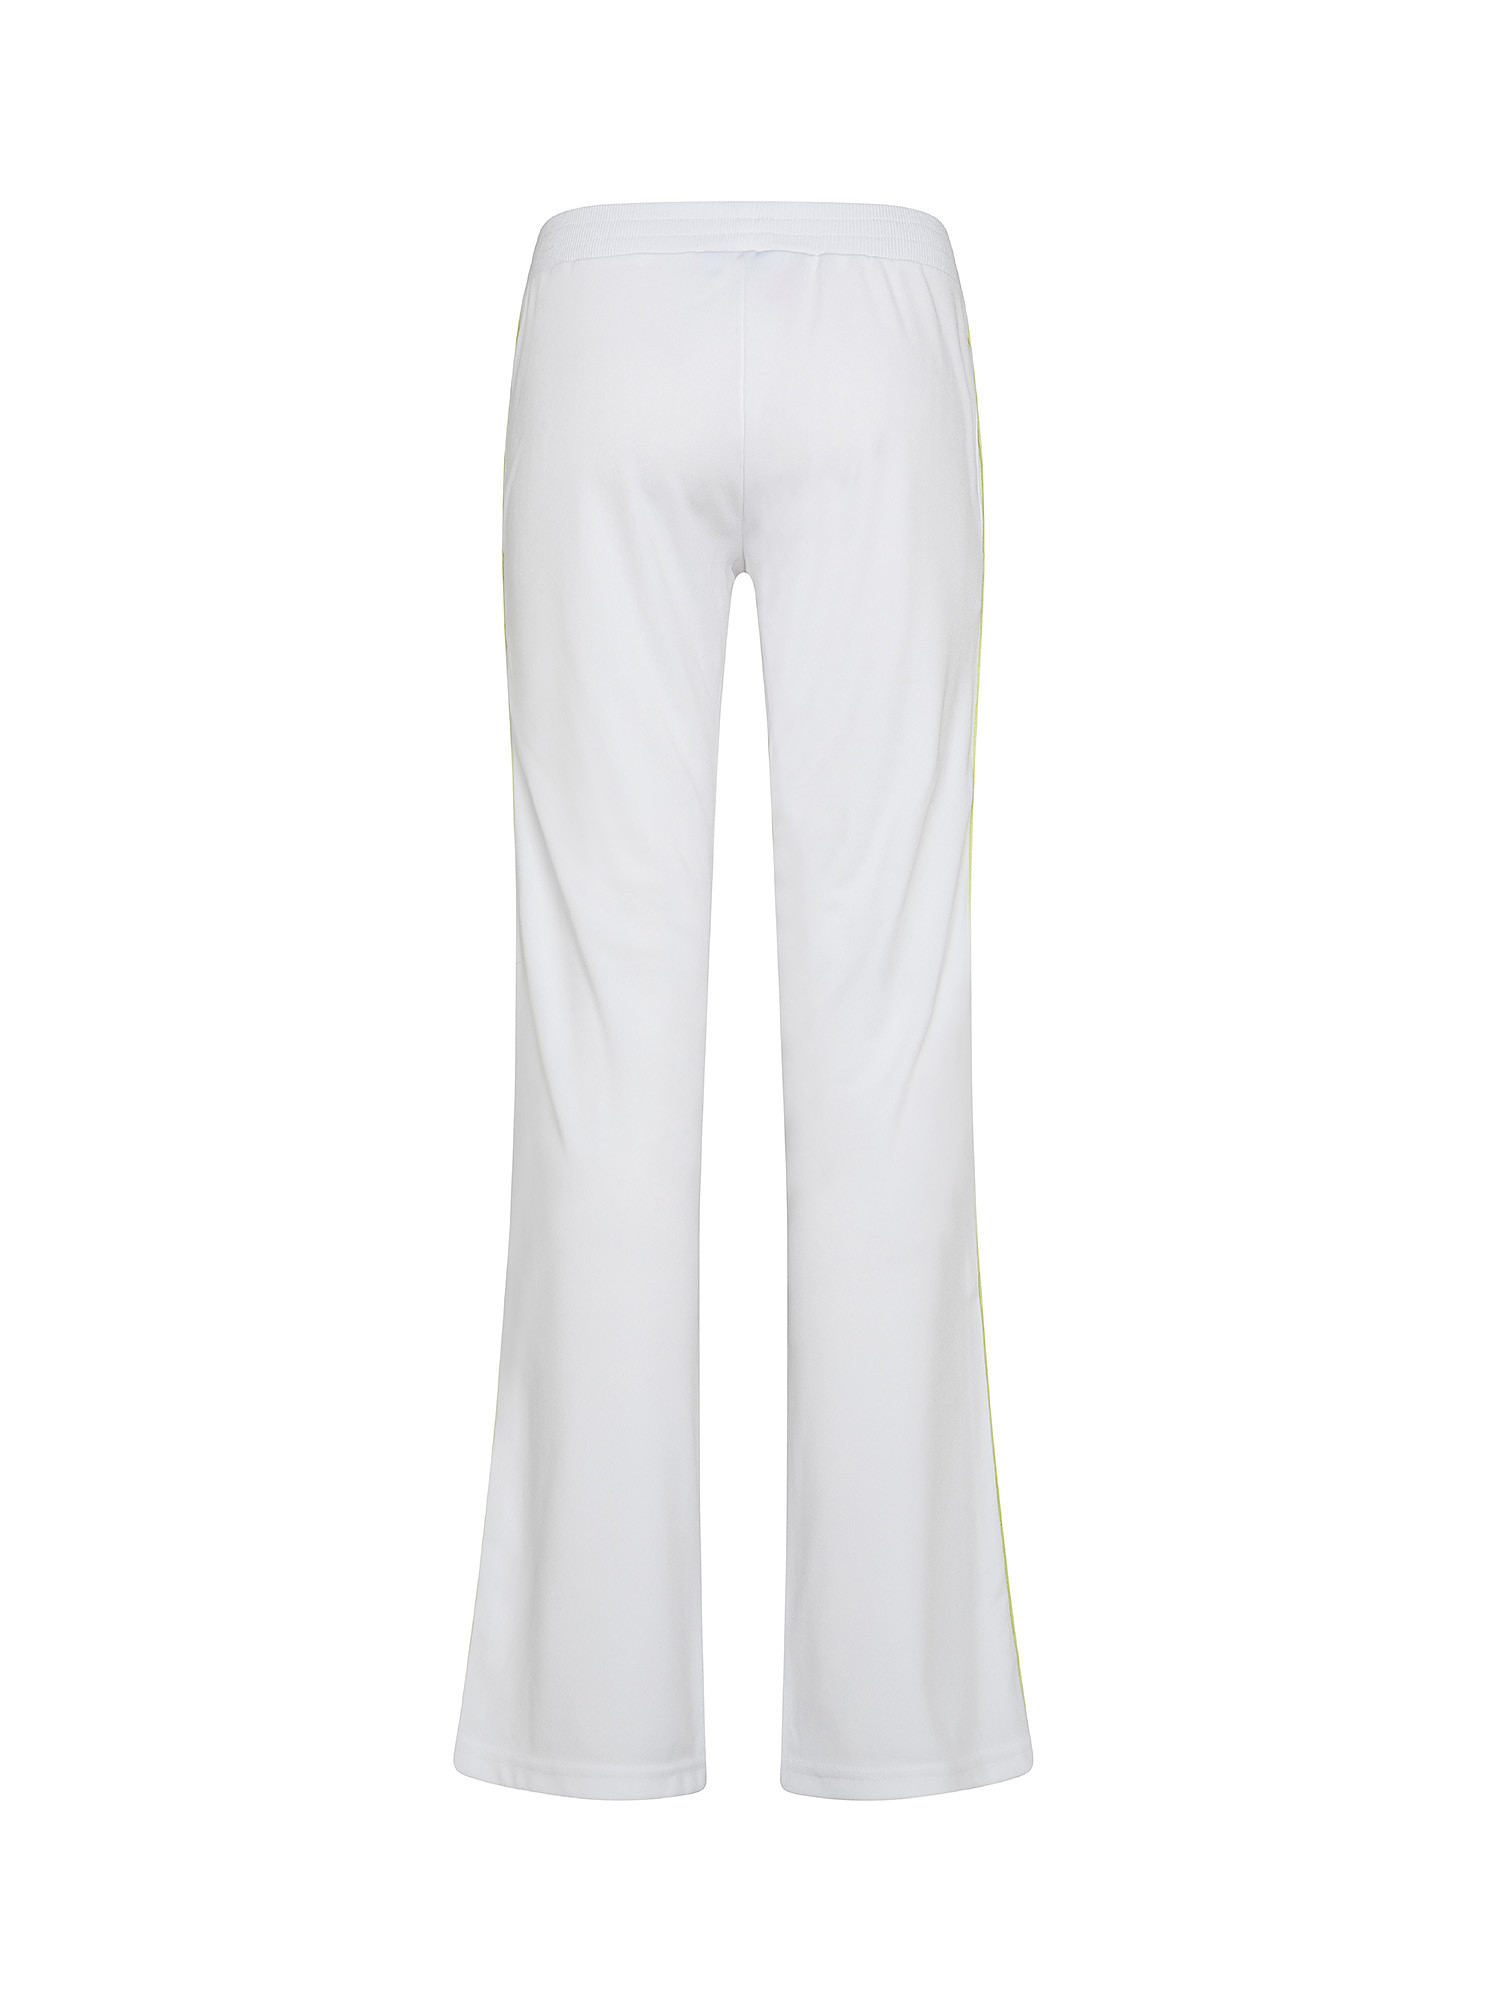 Pantaloni, Bianco, large image number 1